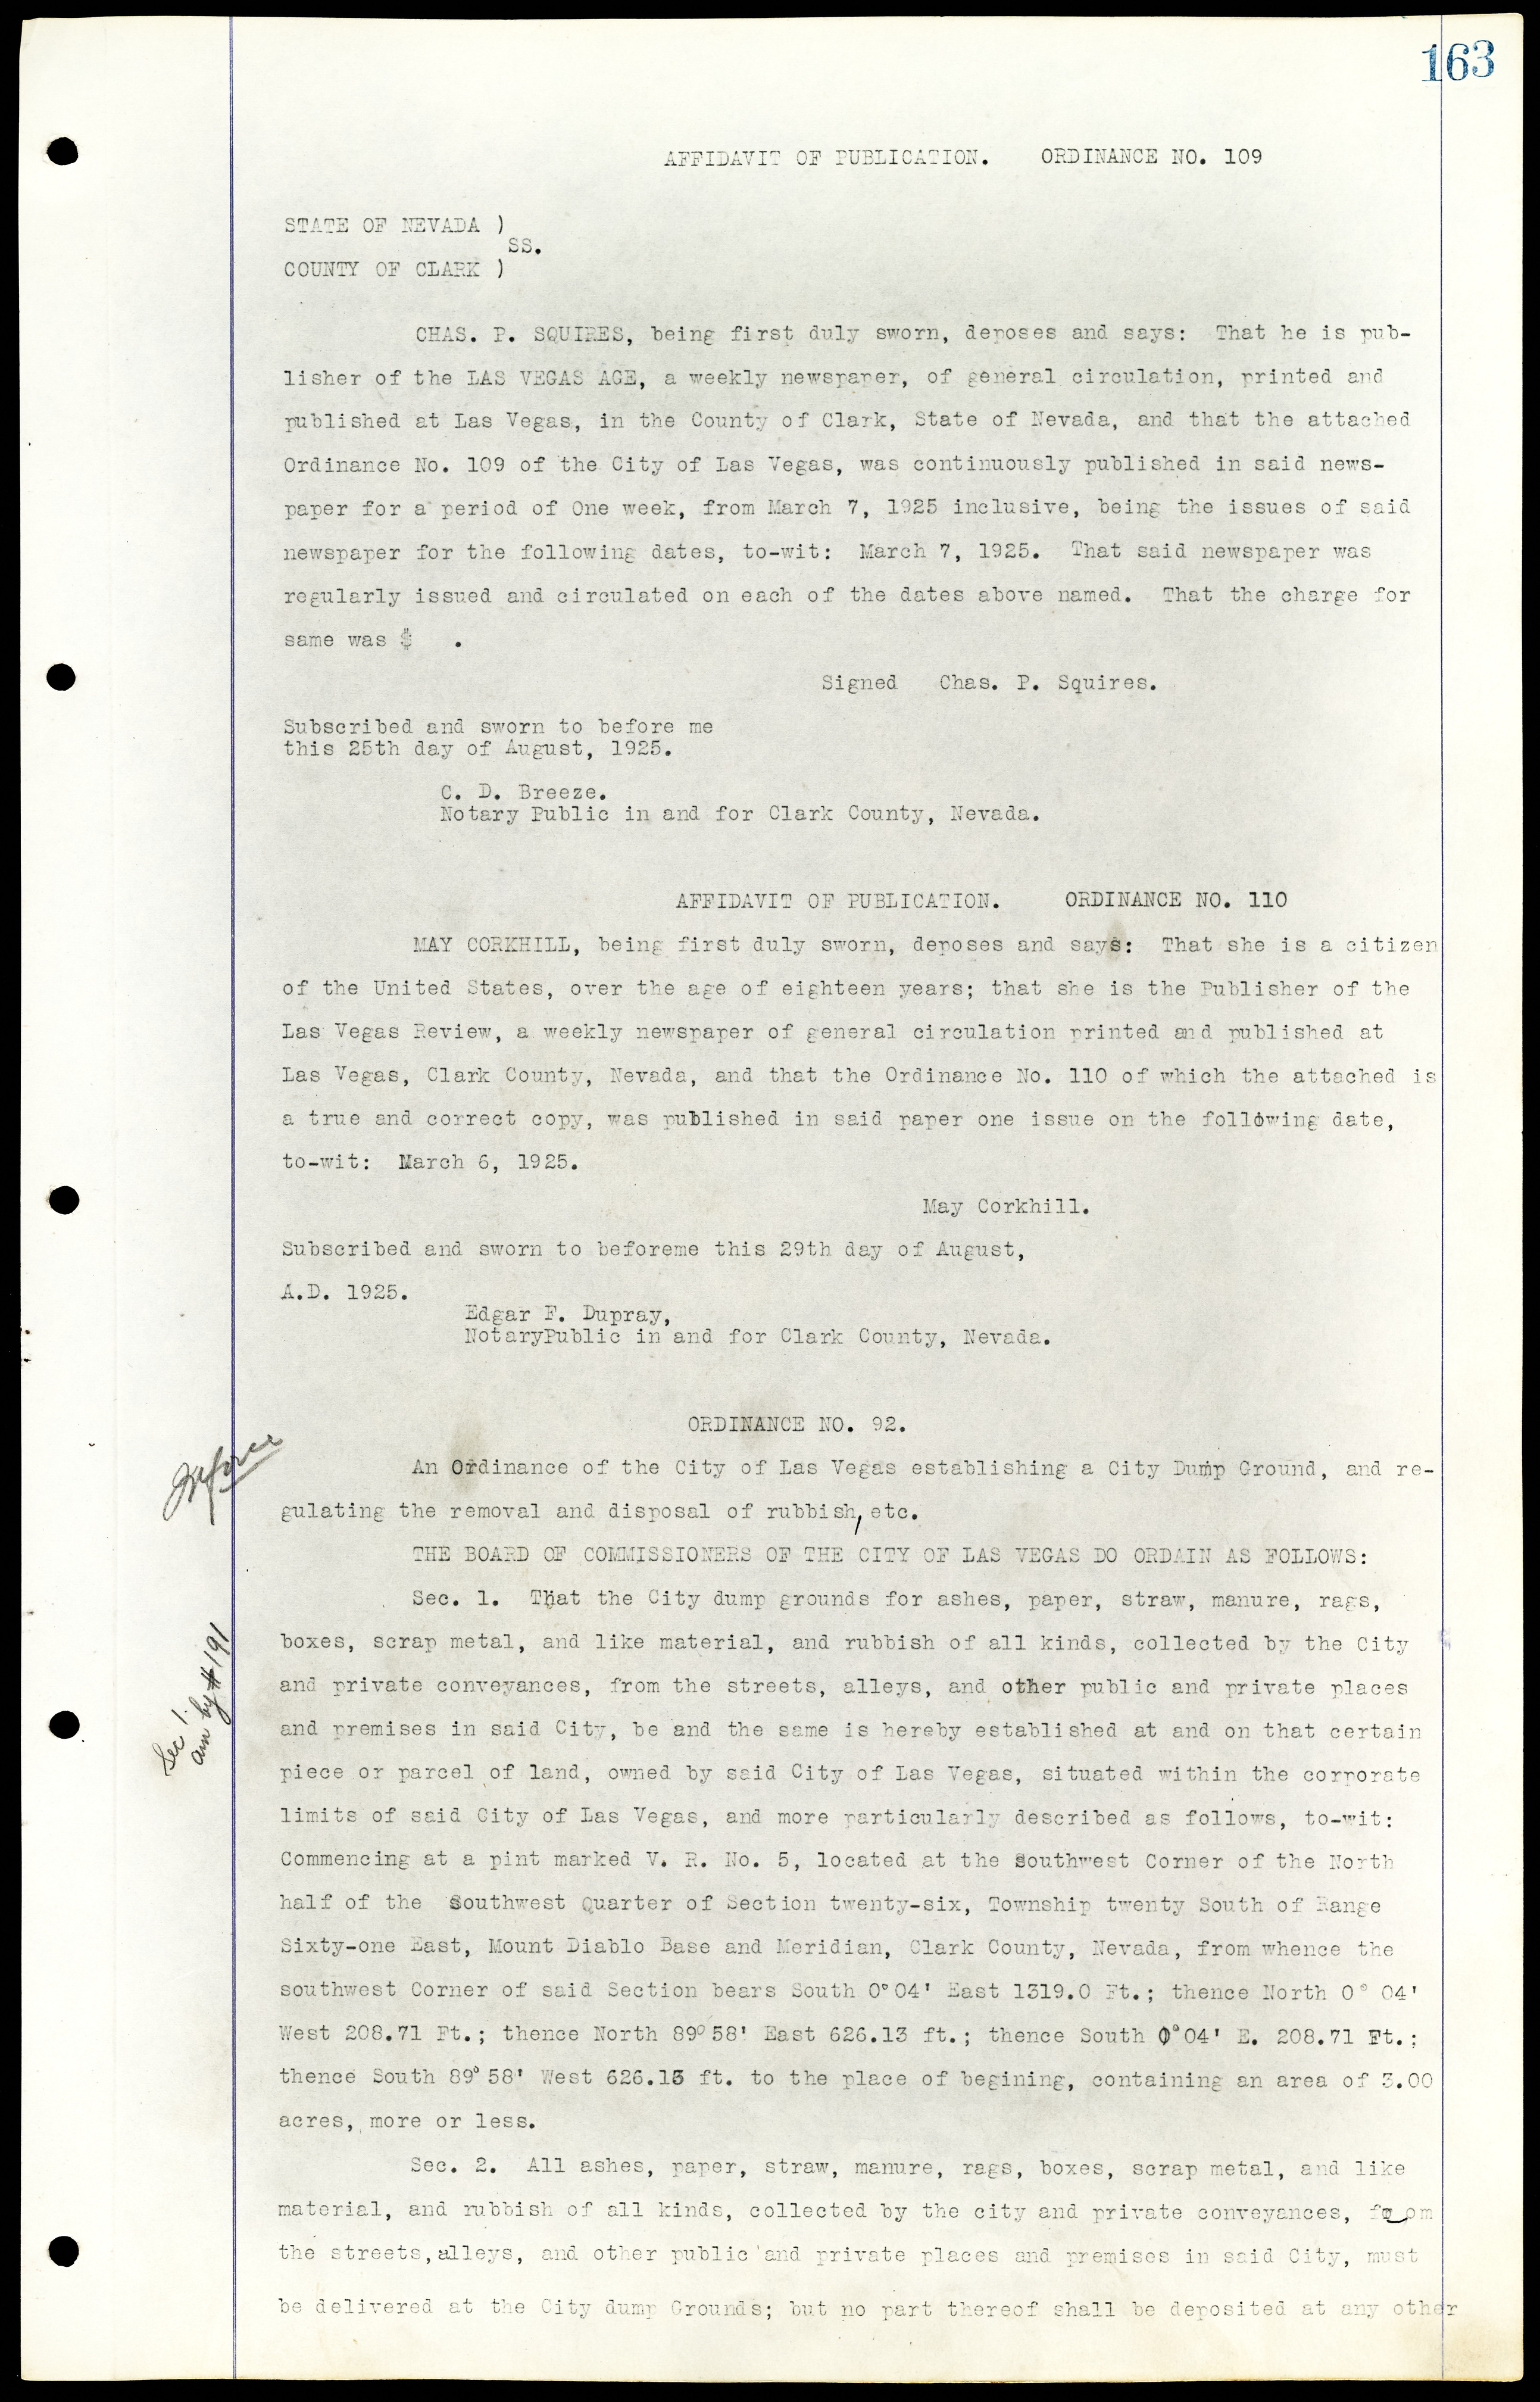 Las Vegas City Ordinances, July 18, 1911 to March 31, 1933, lvc000013-167